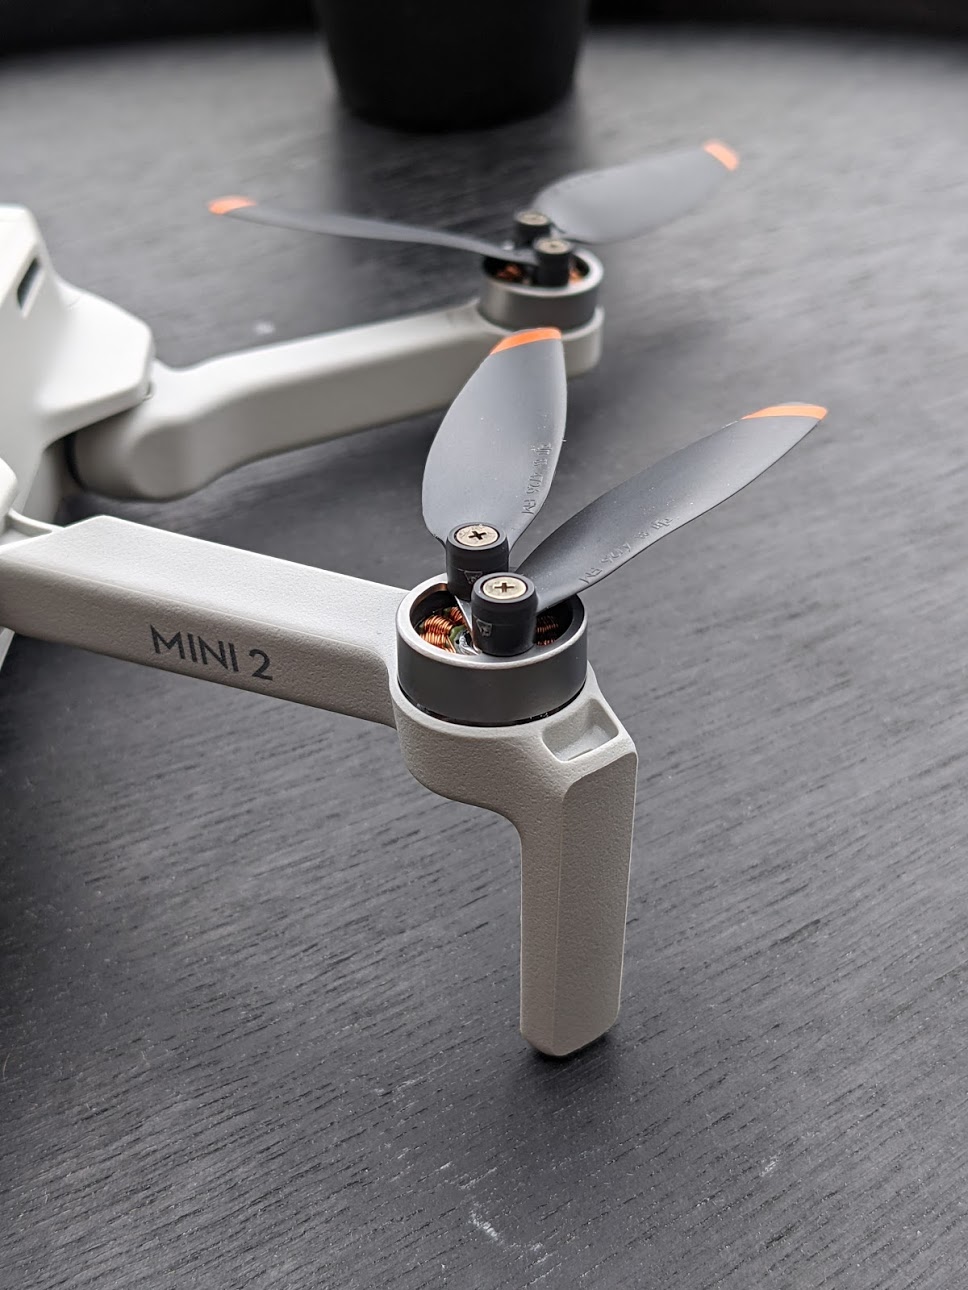 Test DJI Mini 2 : notre avis complet - Drones - Frandroid